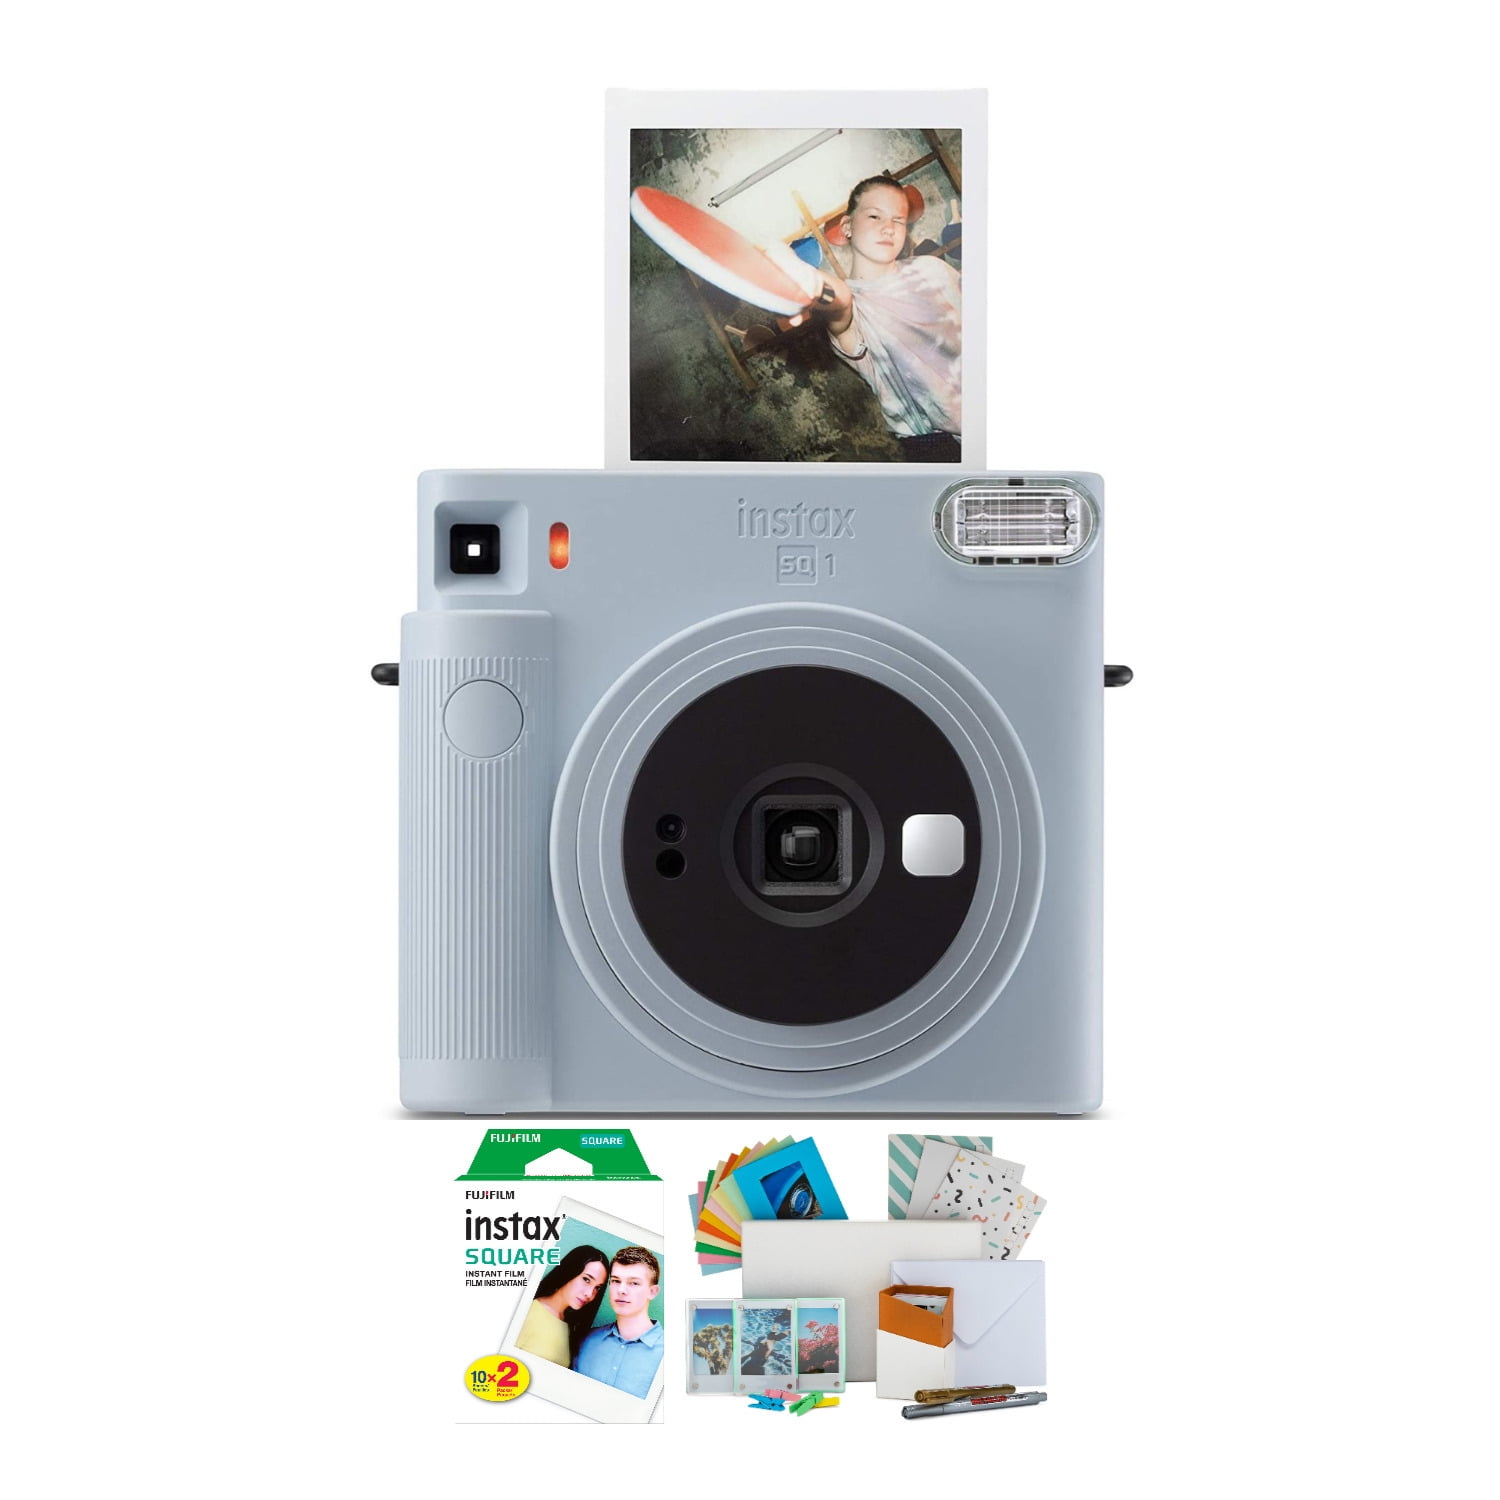 Cámara Instantánea Fujifilm Modelo Instax Square SQ1